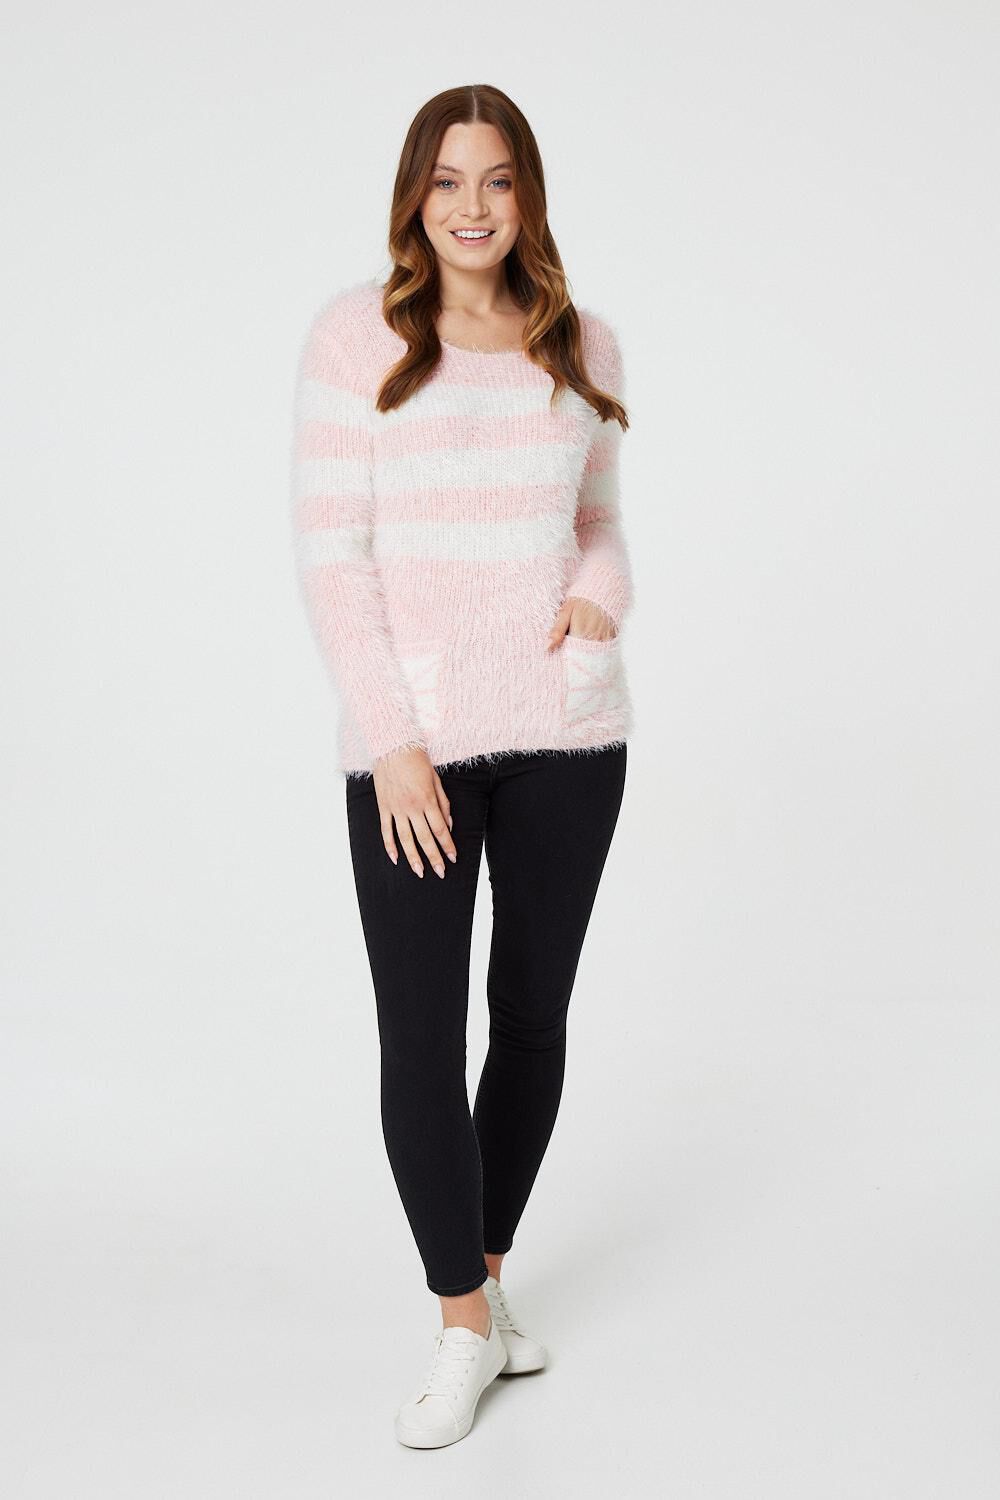 Izabel London Women’s Pale Pink Striped Pocket Front Knitted Jumper, Size: L